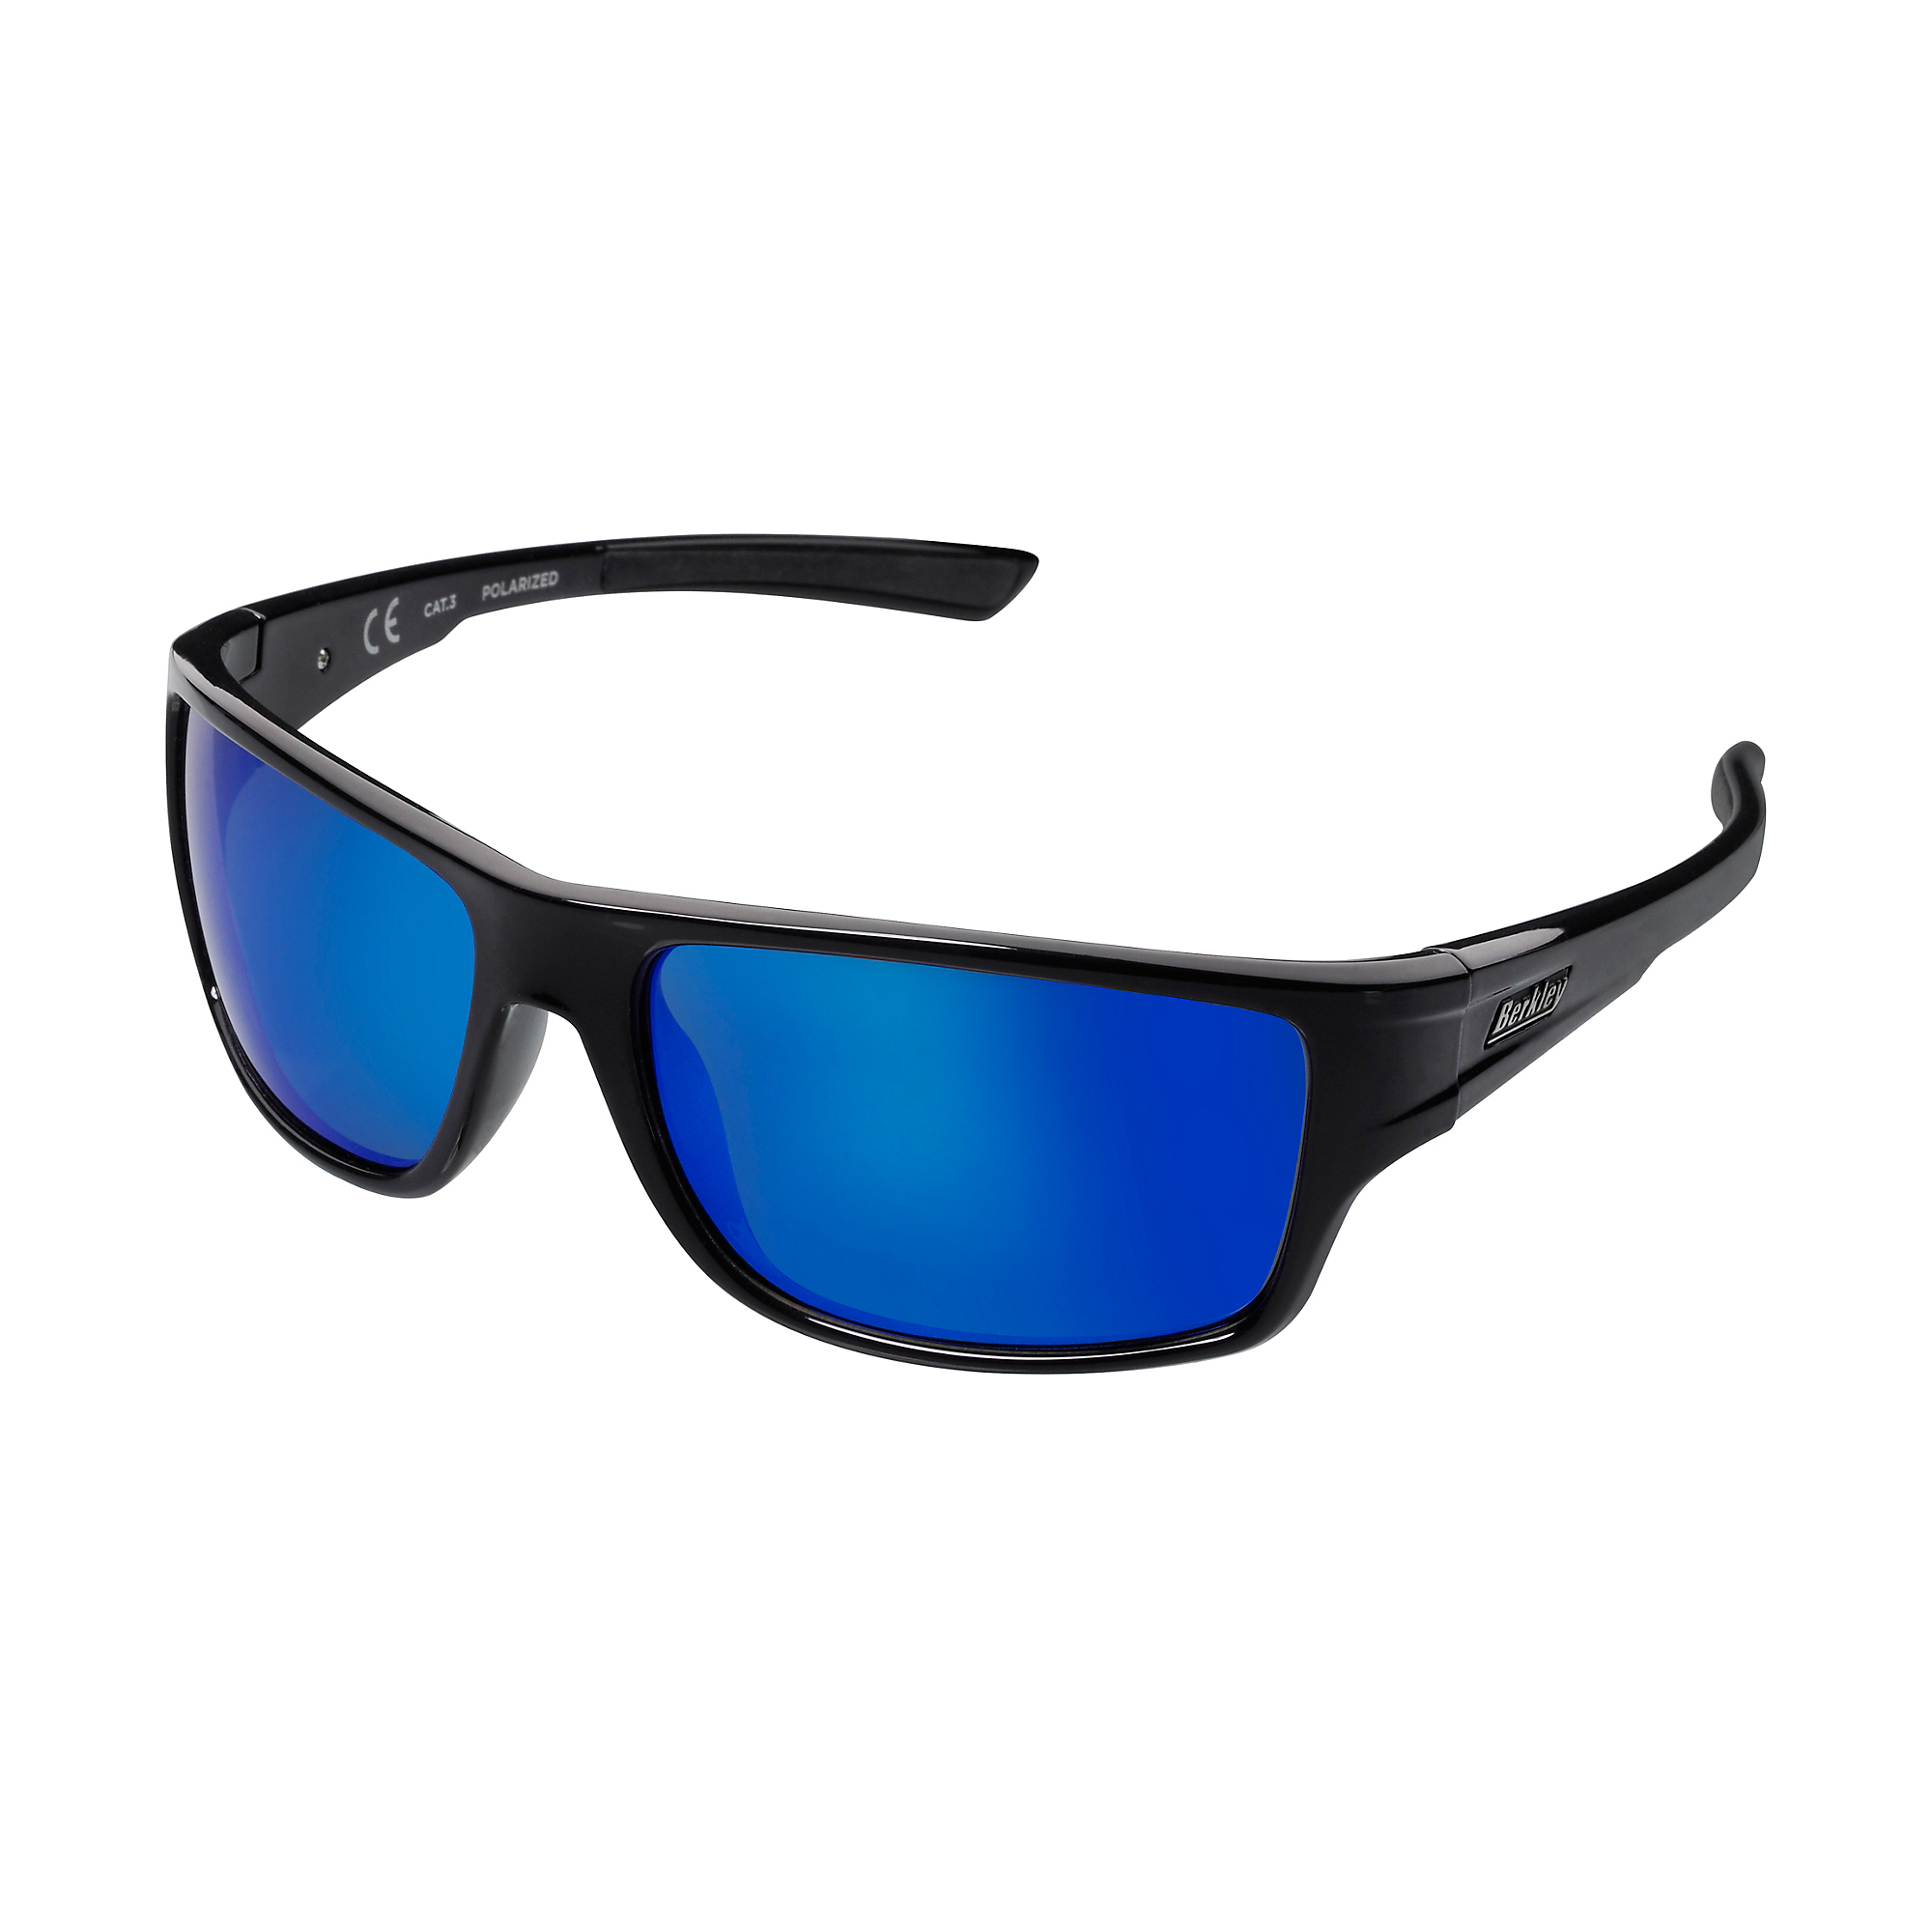 Berkley B11 Sunglasses - Noir / Gris / Bleu Revo